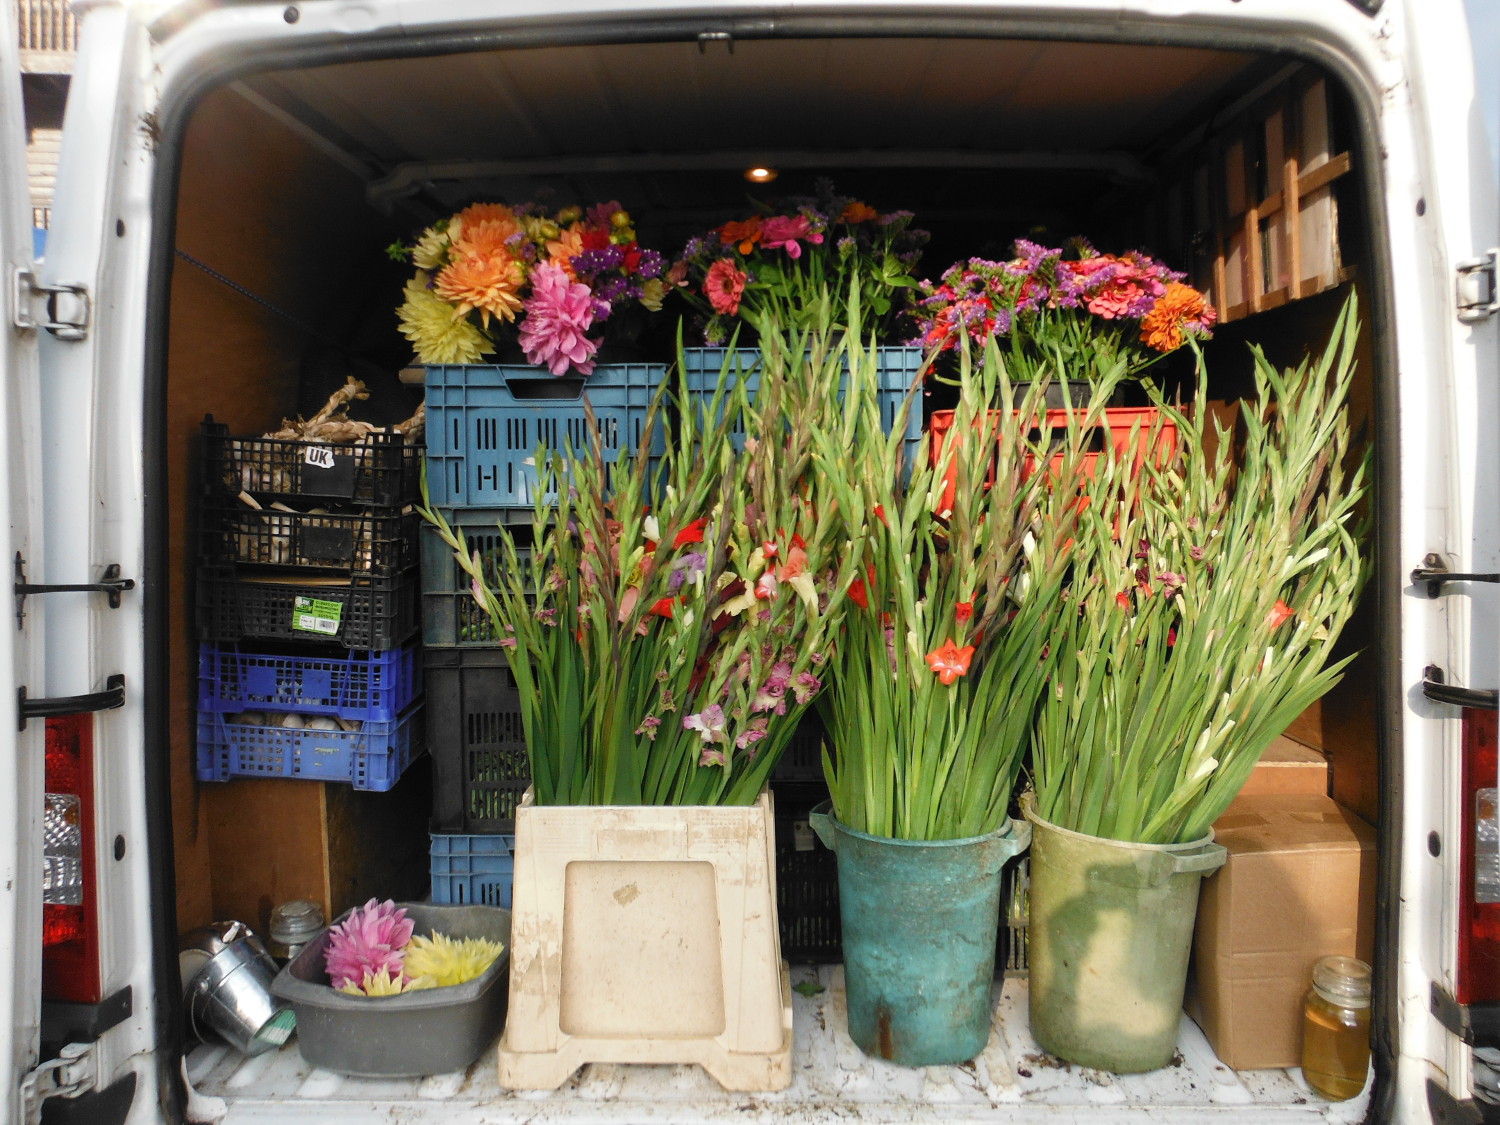 Flowers in the back of the van